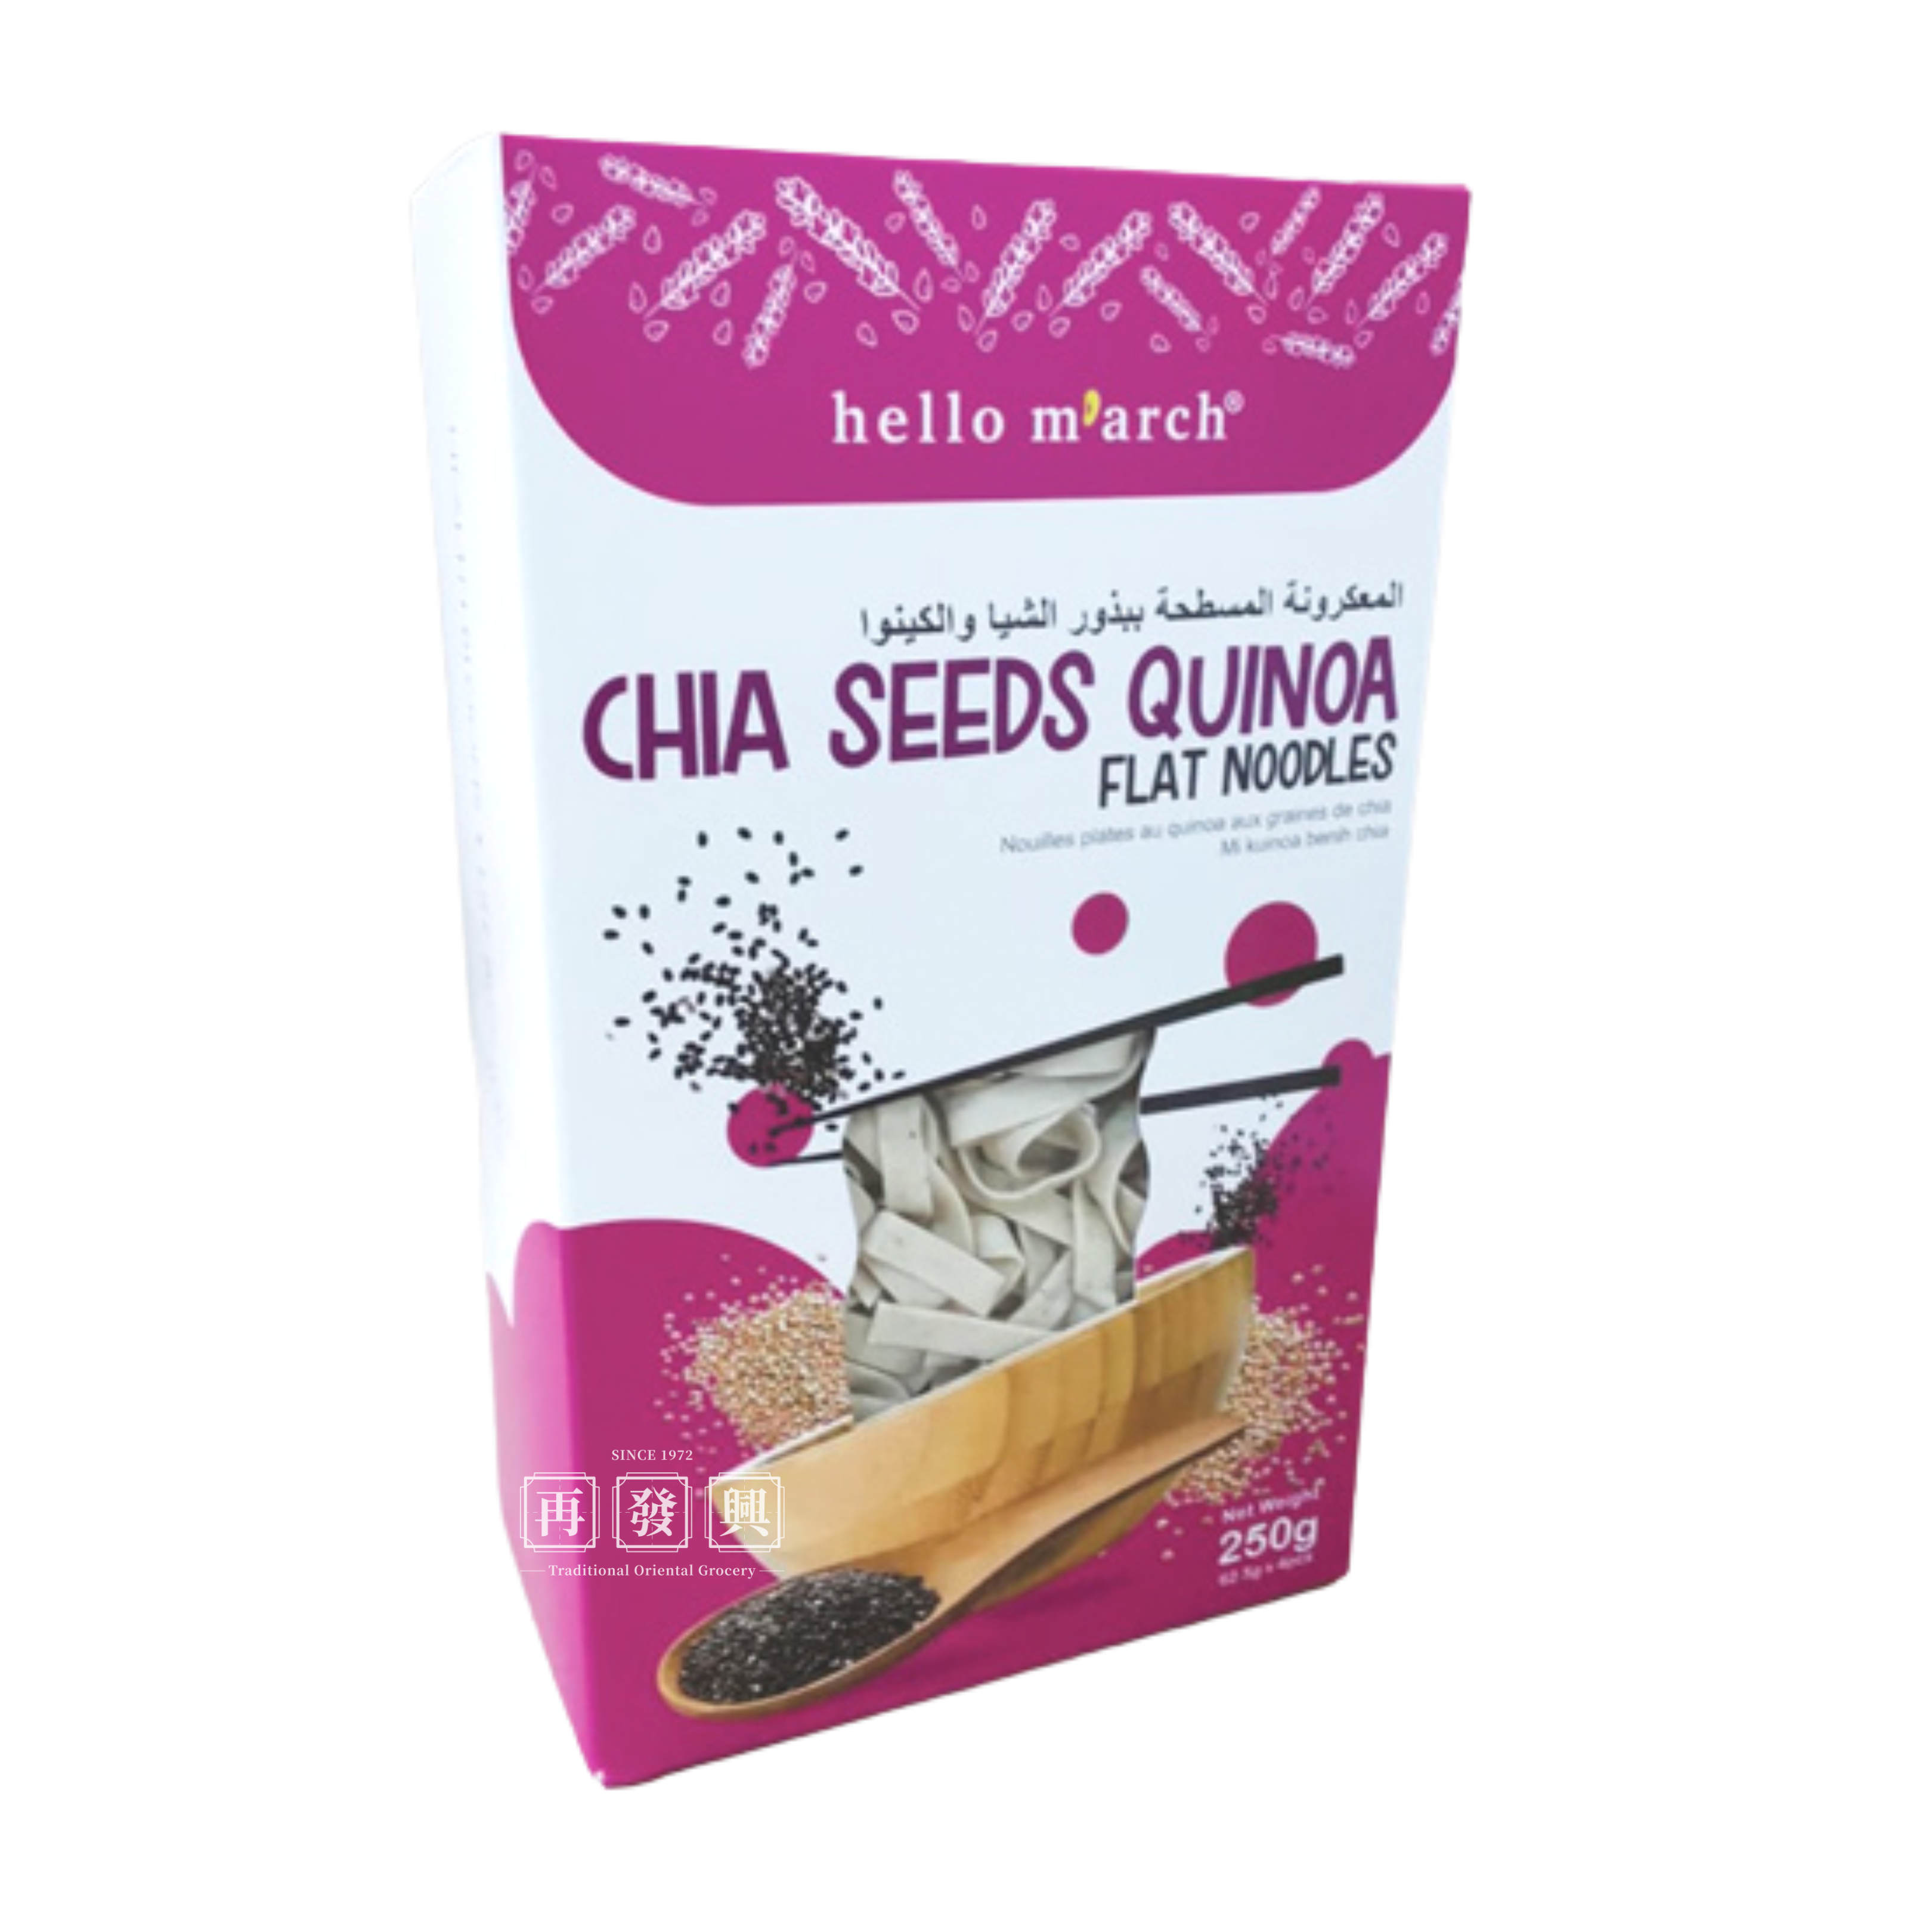 Hello M'arch Chia Seeds Quinoa Flat Noodles 奇亚籽藜麦扁面条 250g